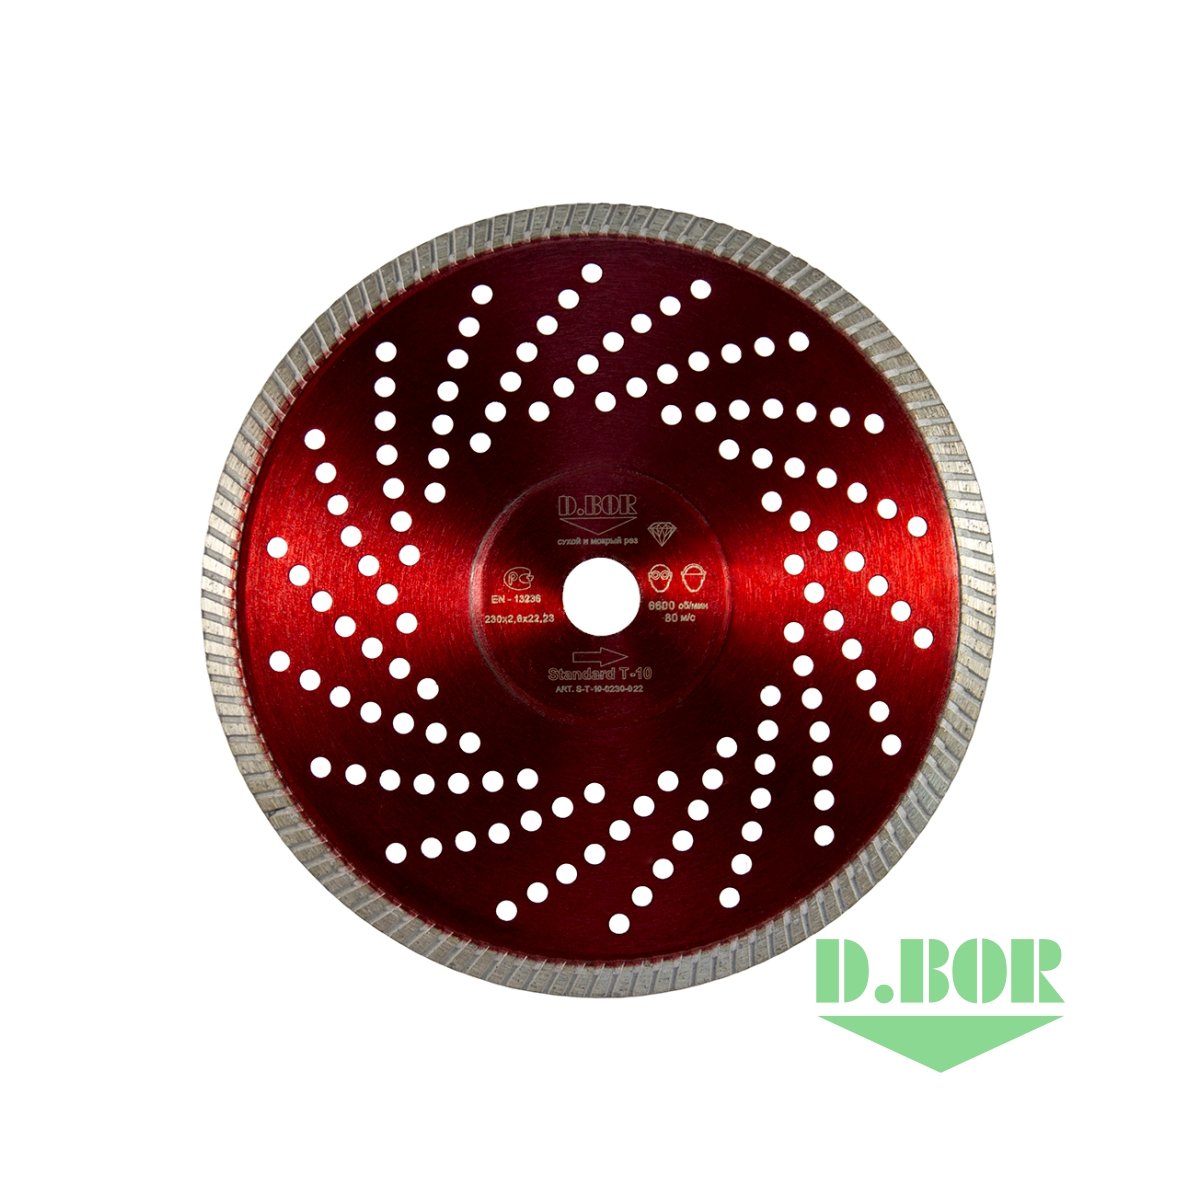 Алмазный диск Standard T-10, 150x2,2x22,23 (арт. S-T-10-0150-022) "D.BOR"